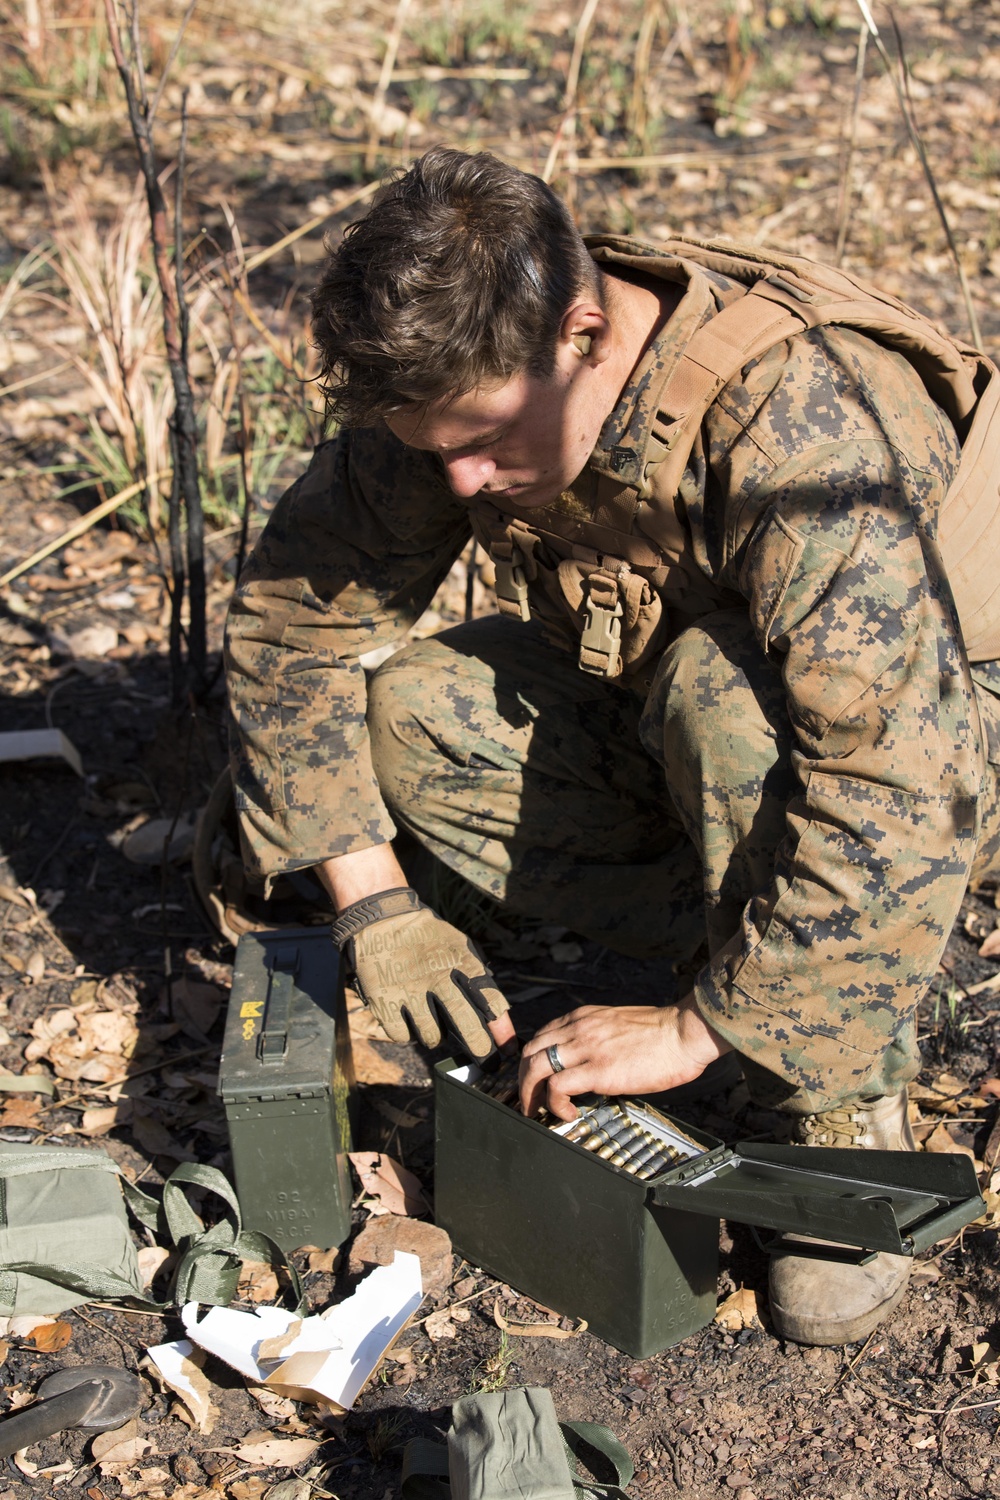 Open fire! U.S. Marines share machine gun skills with Australian counterparts